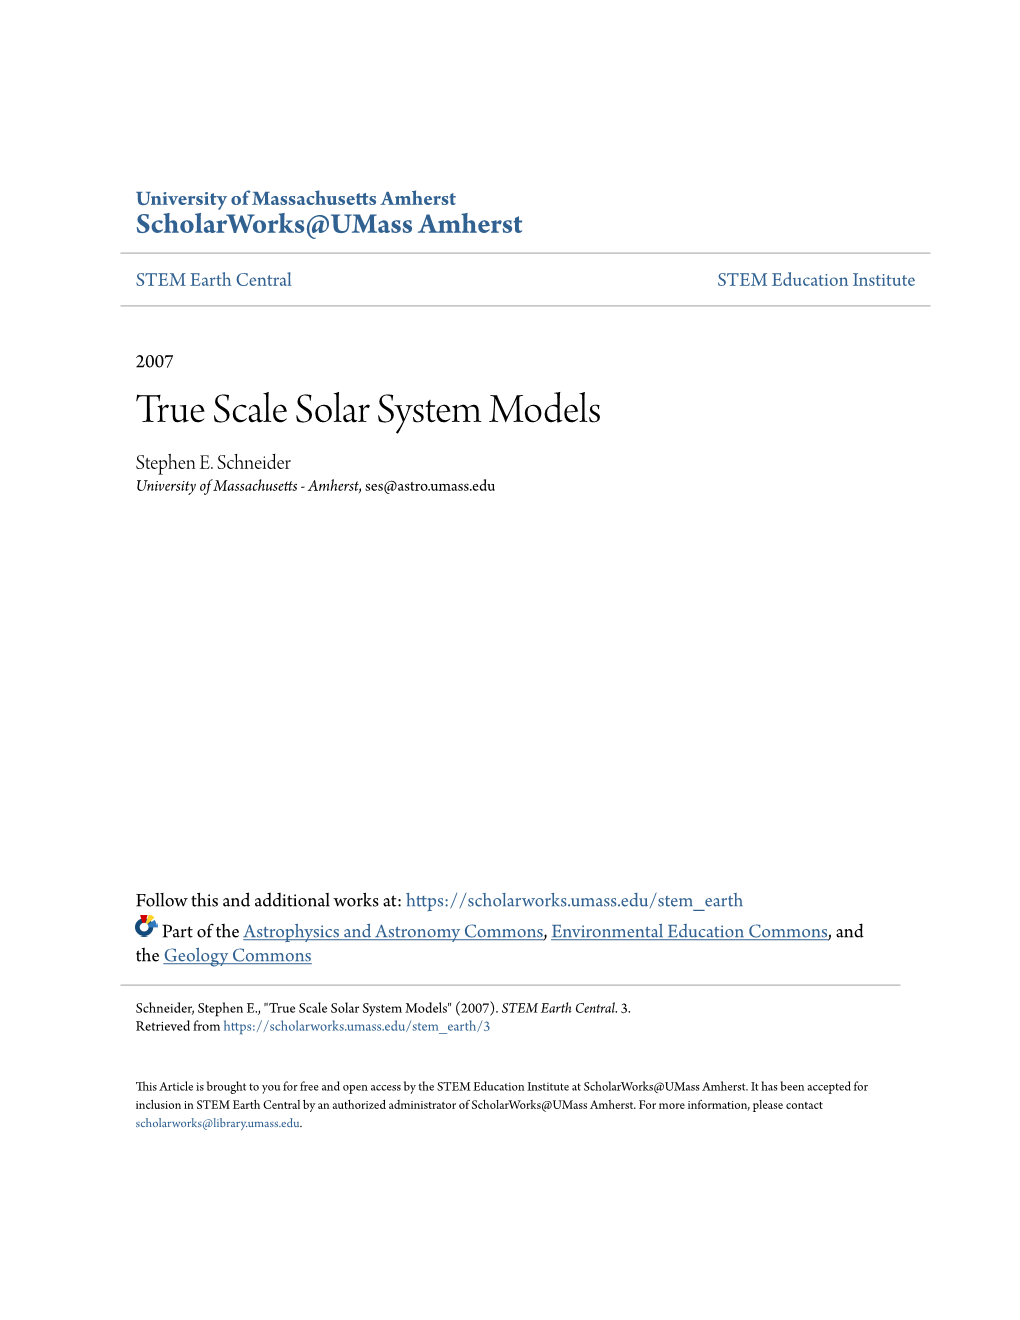 True Scale Solar System Models Stephen E